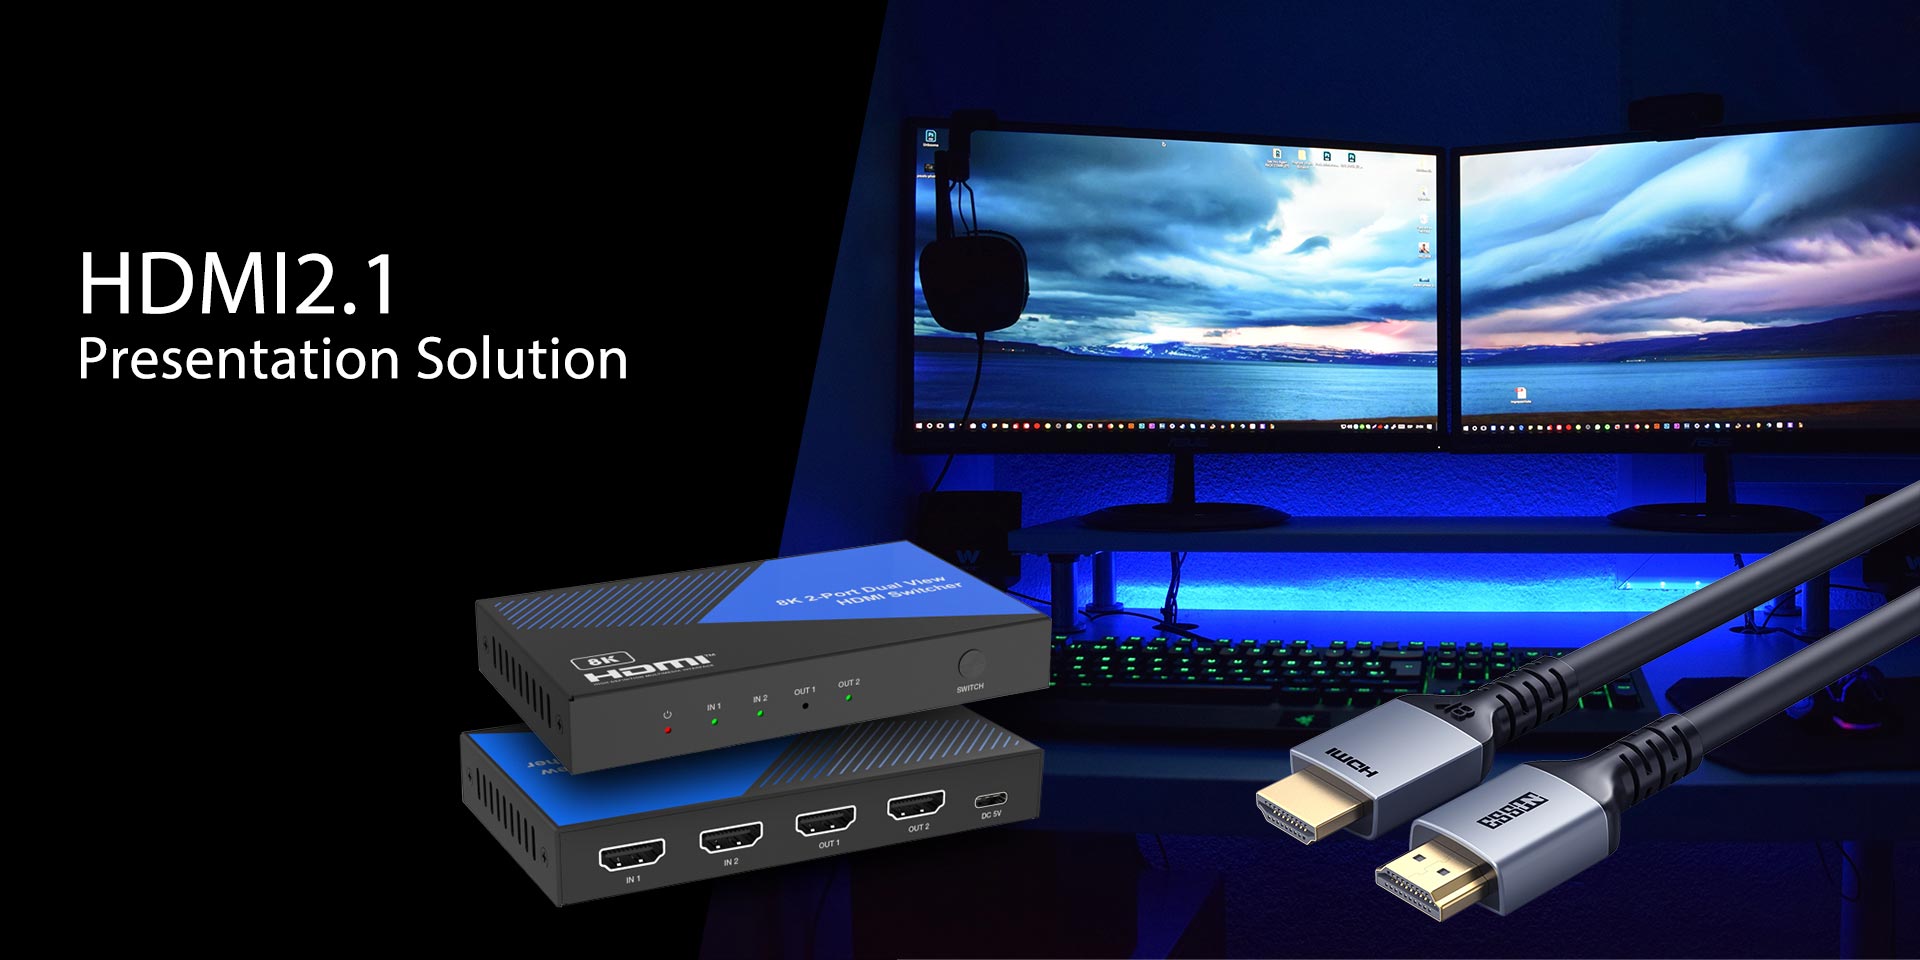 Are you ready for HDMI2.1 period? - NINGBO ALLINE ELEC. TECH. CO., LTD.